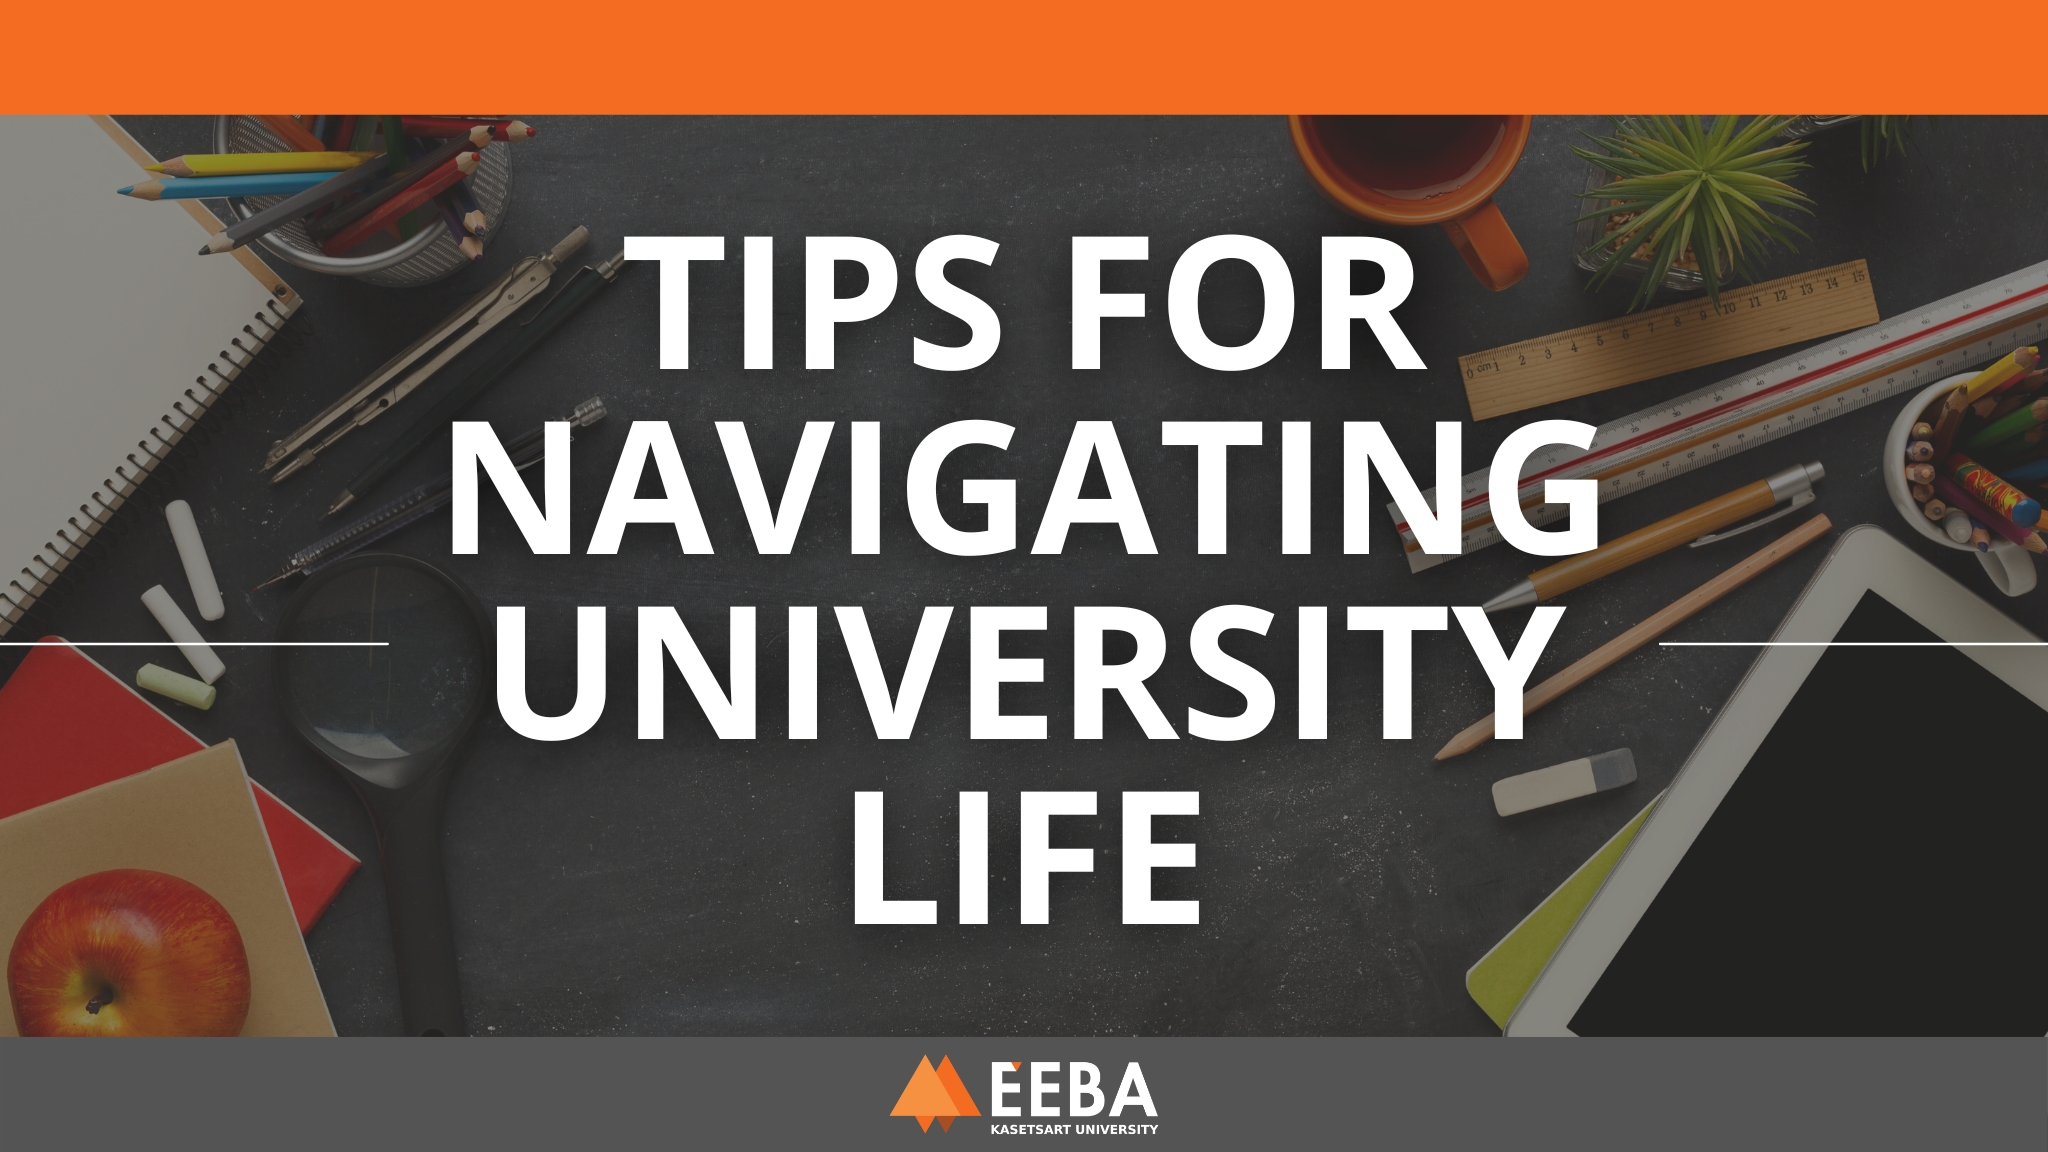 “Tips for Navigating University Life”